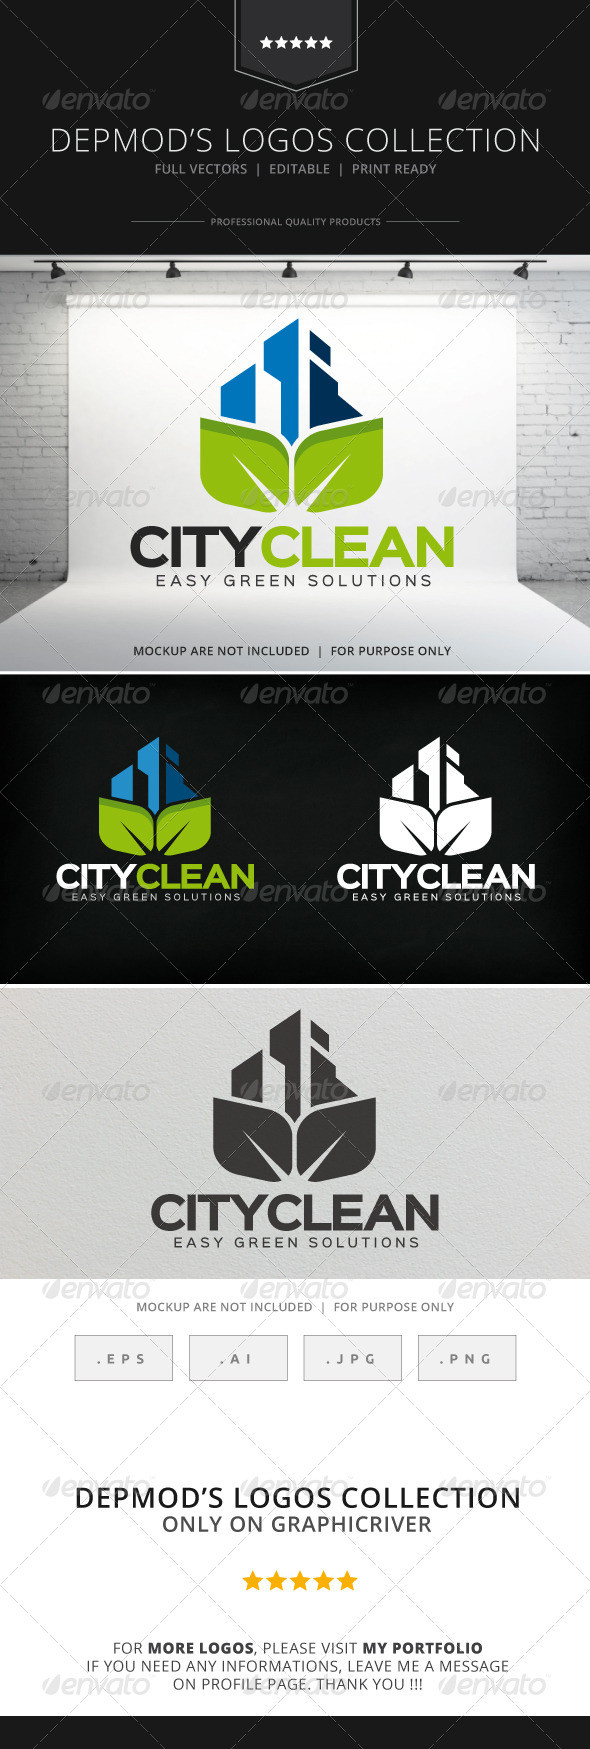 City clean logo